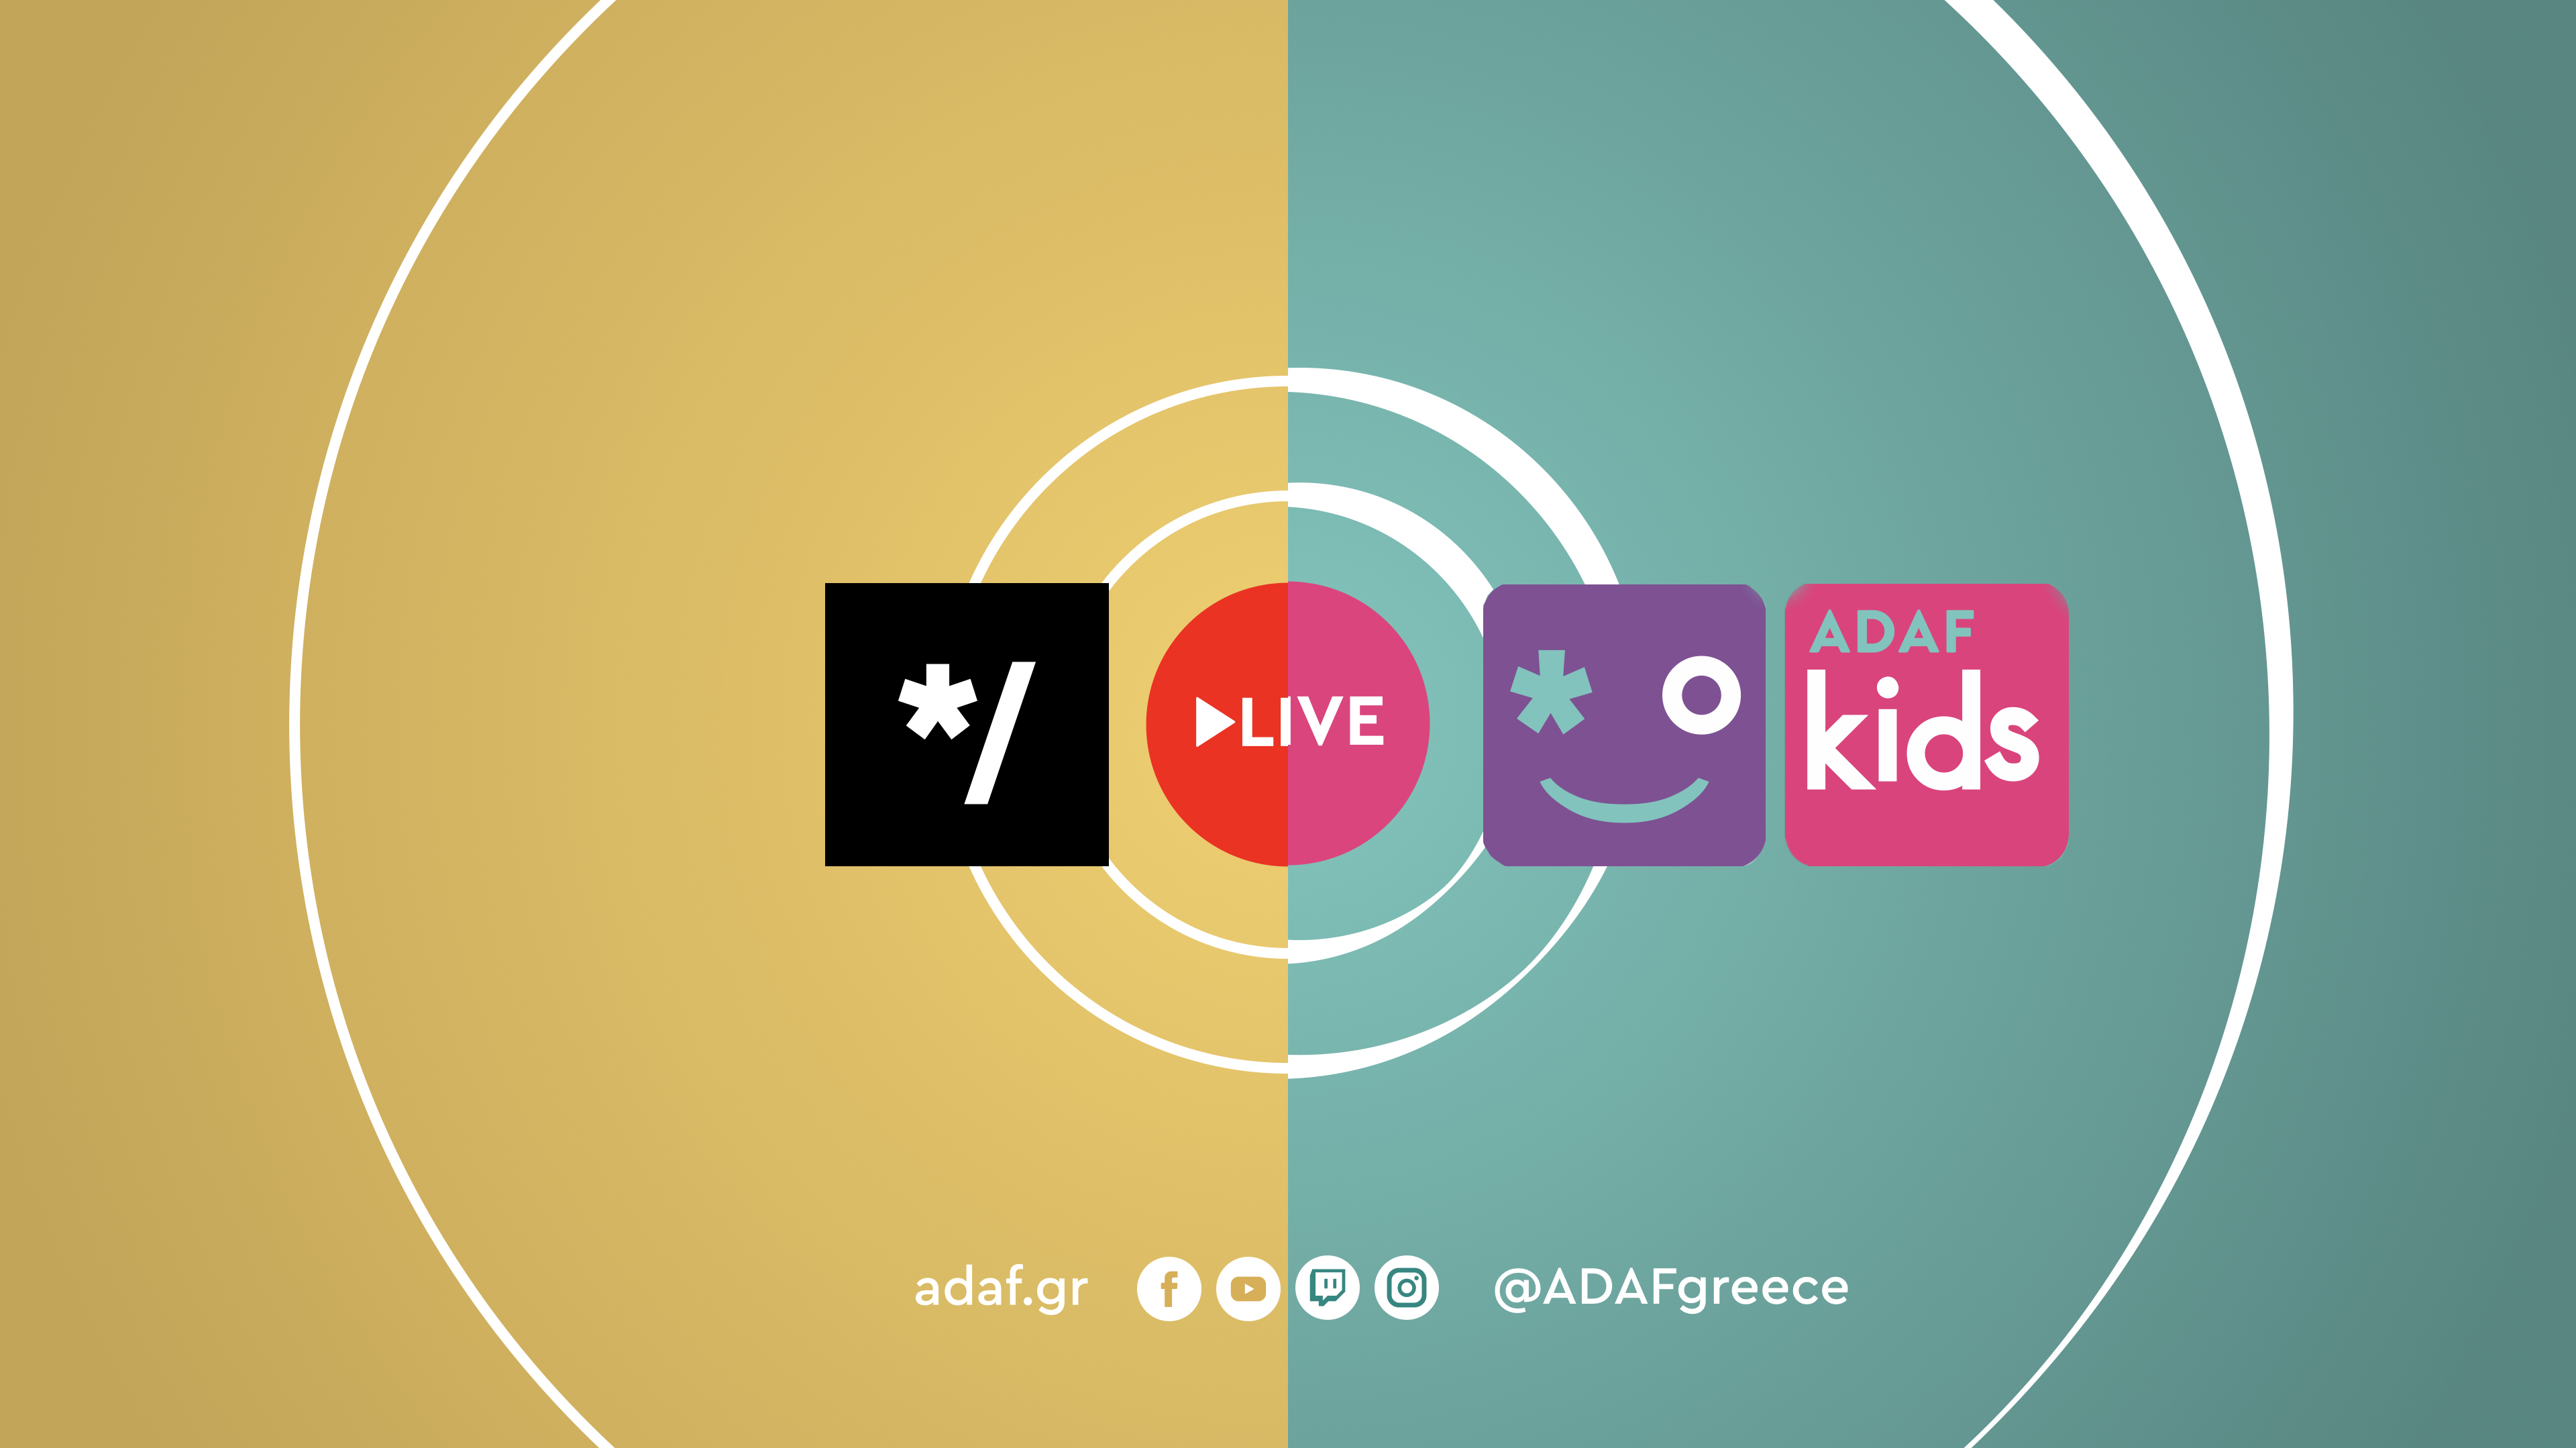 ADAF Live | ADAF Kids Live